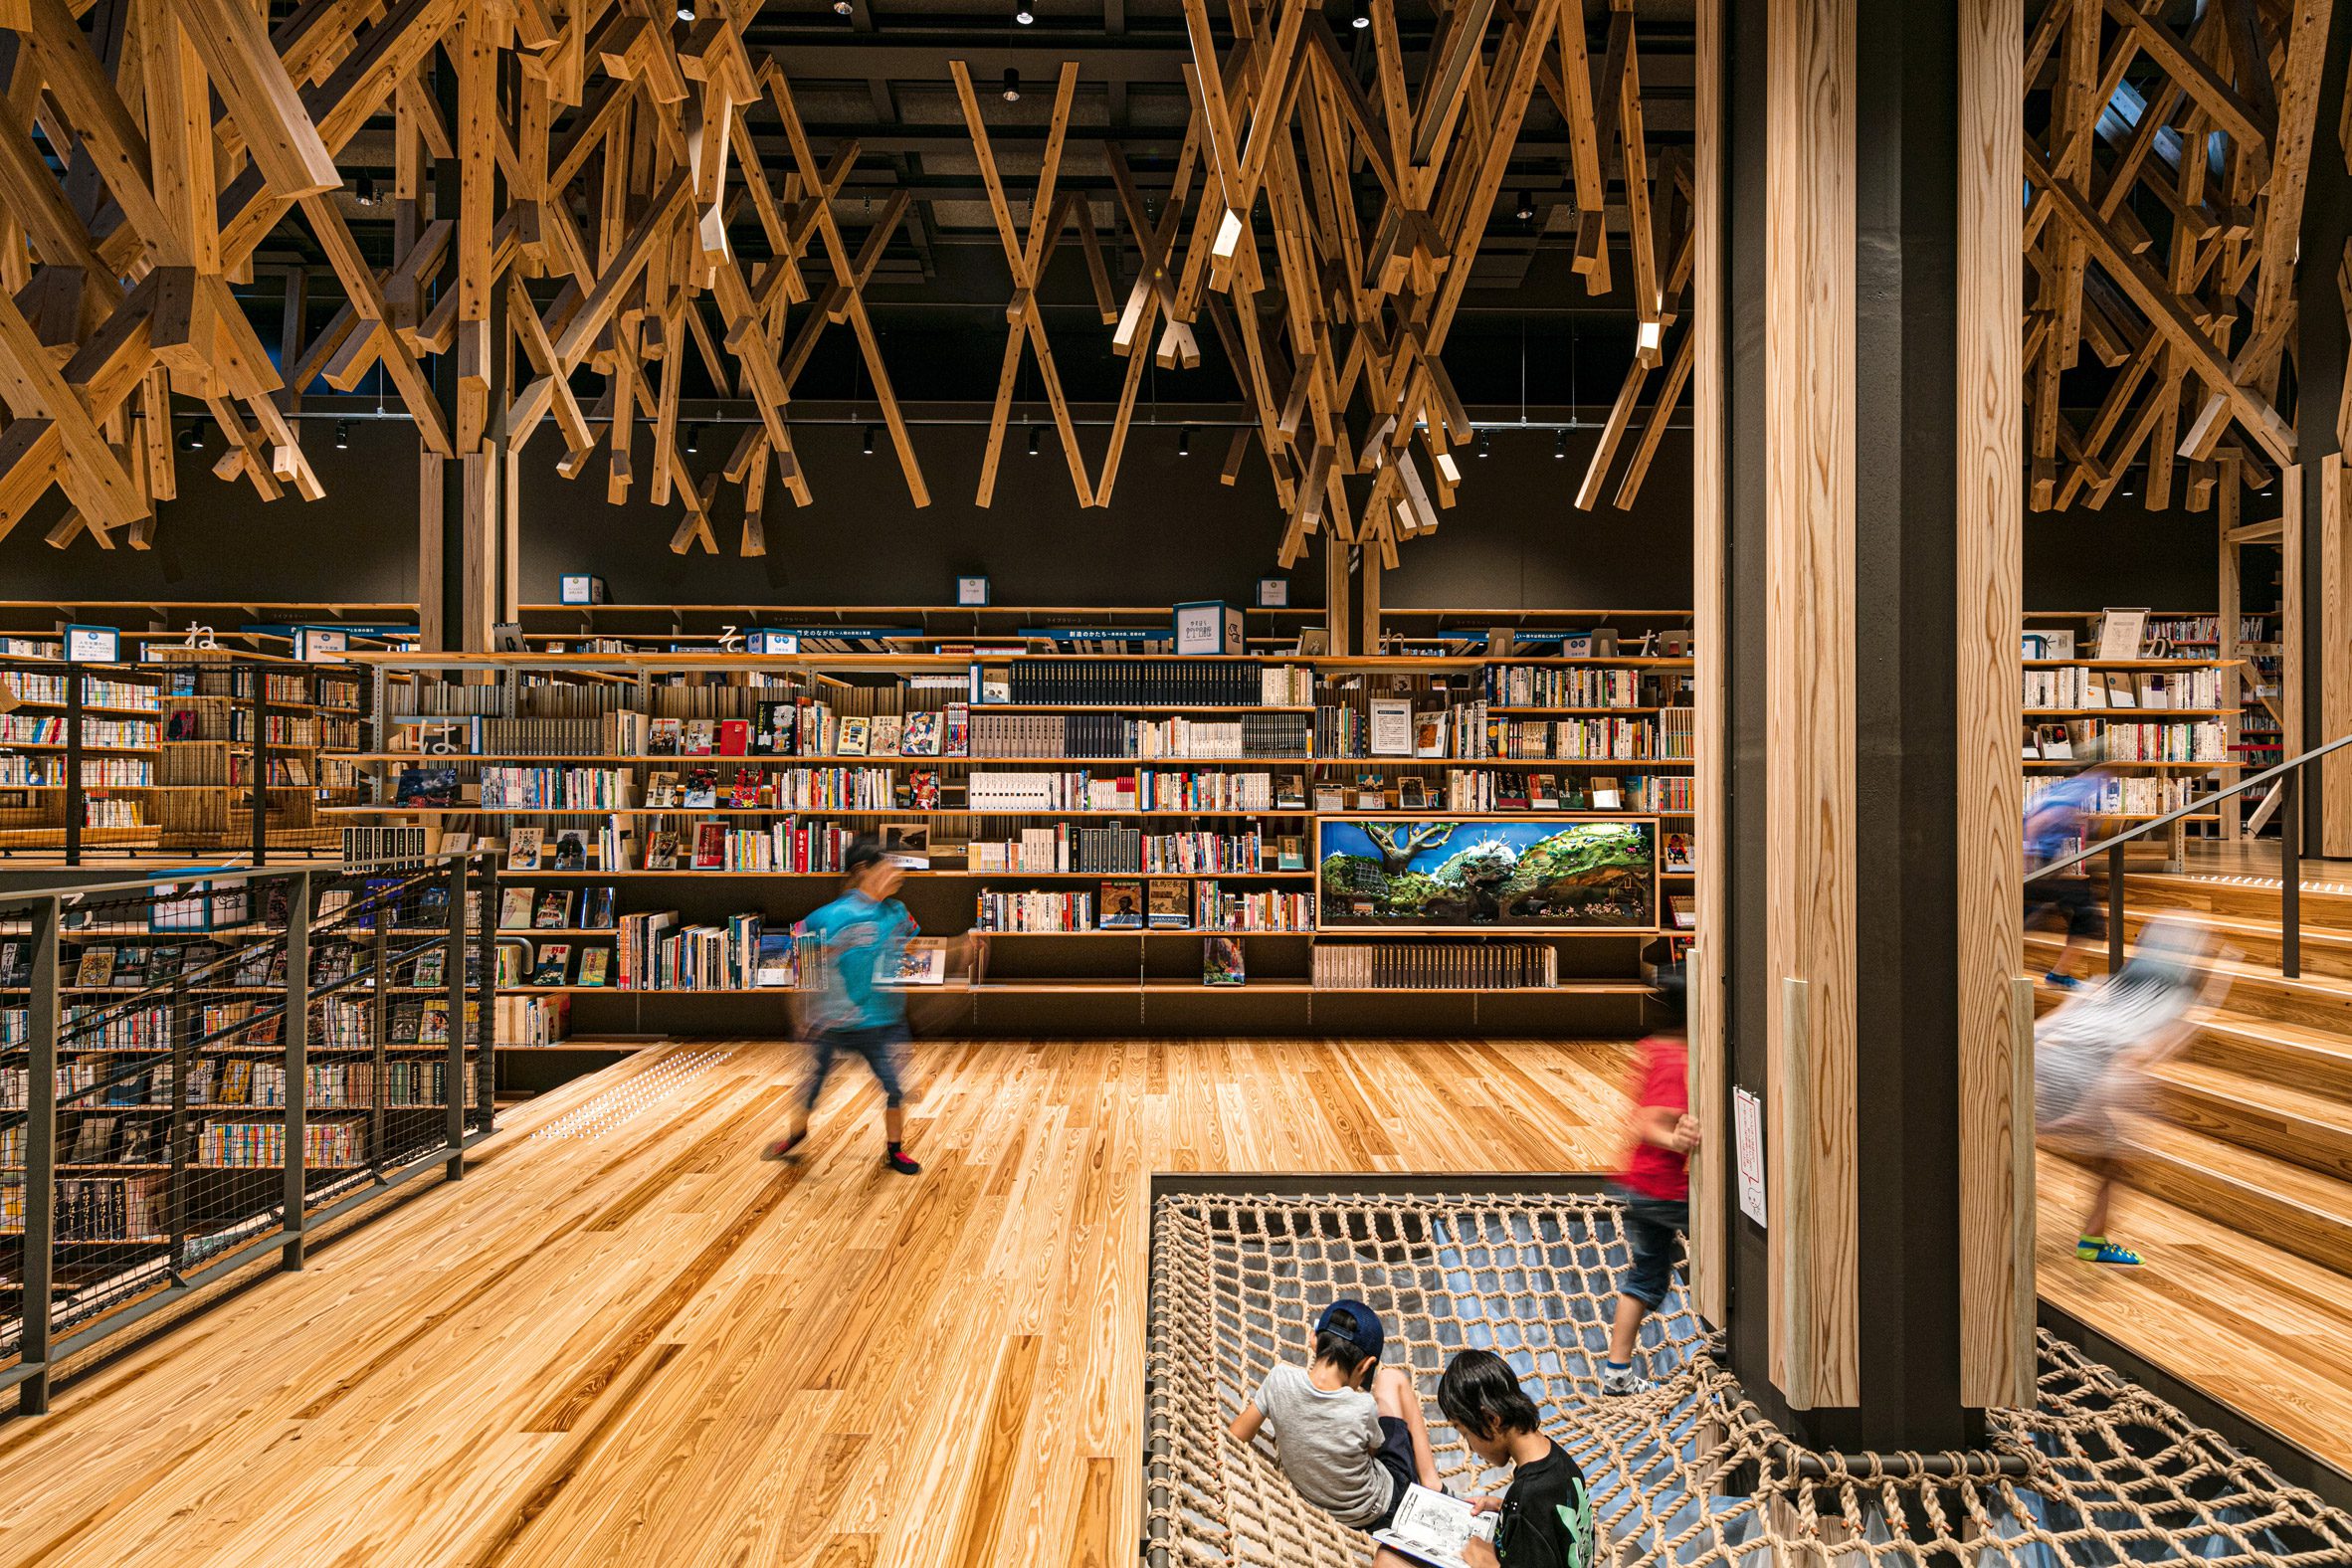 Yusuhara Commu-nity Library by Kengo Kuma